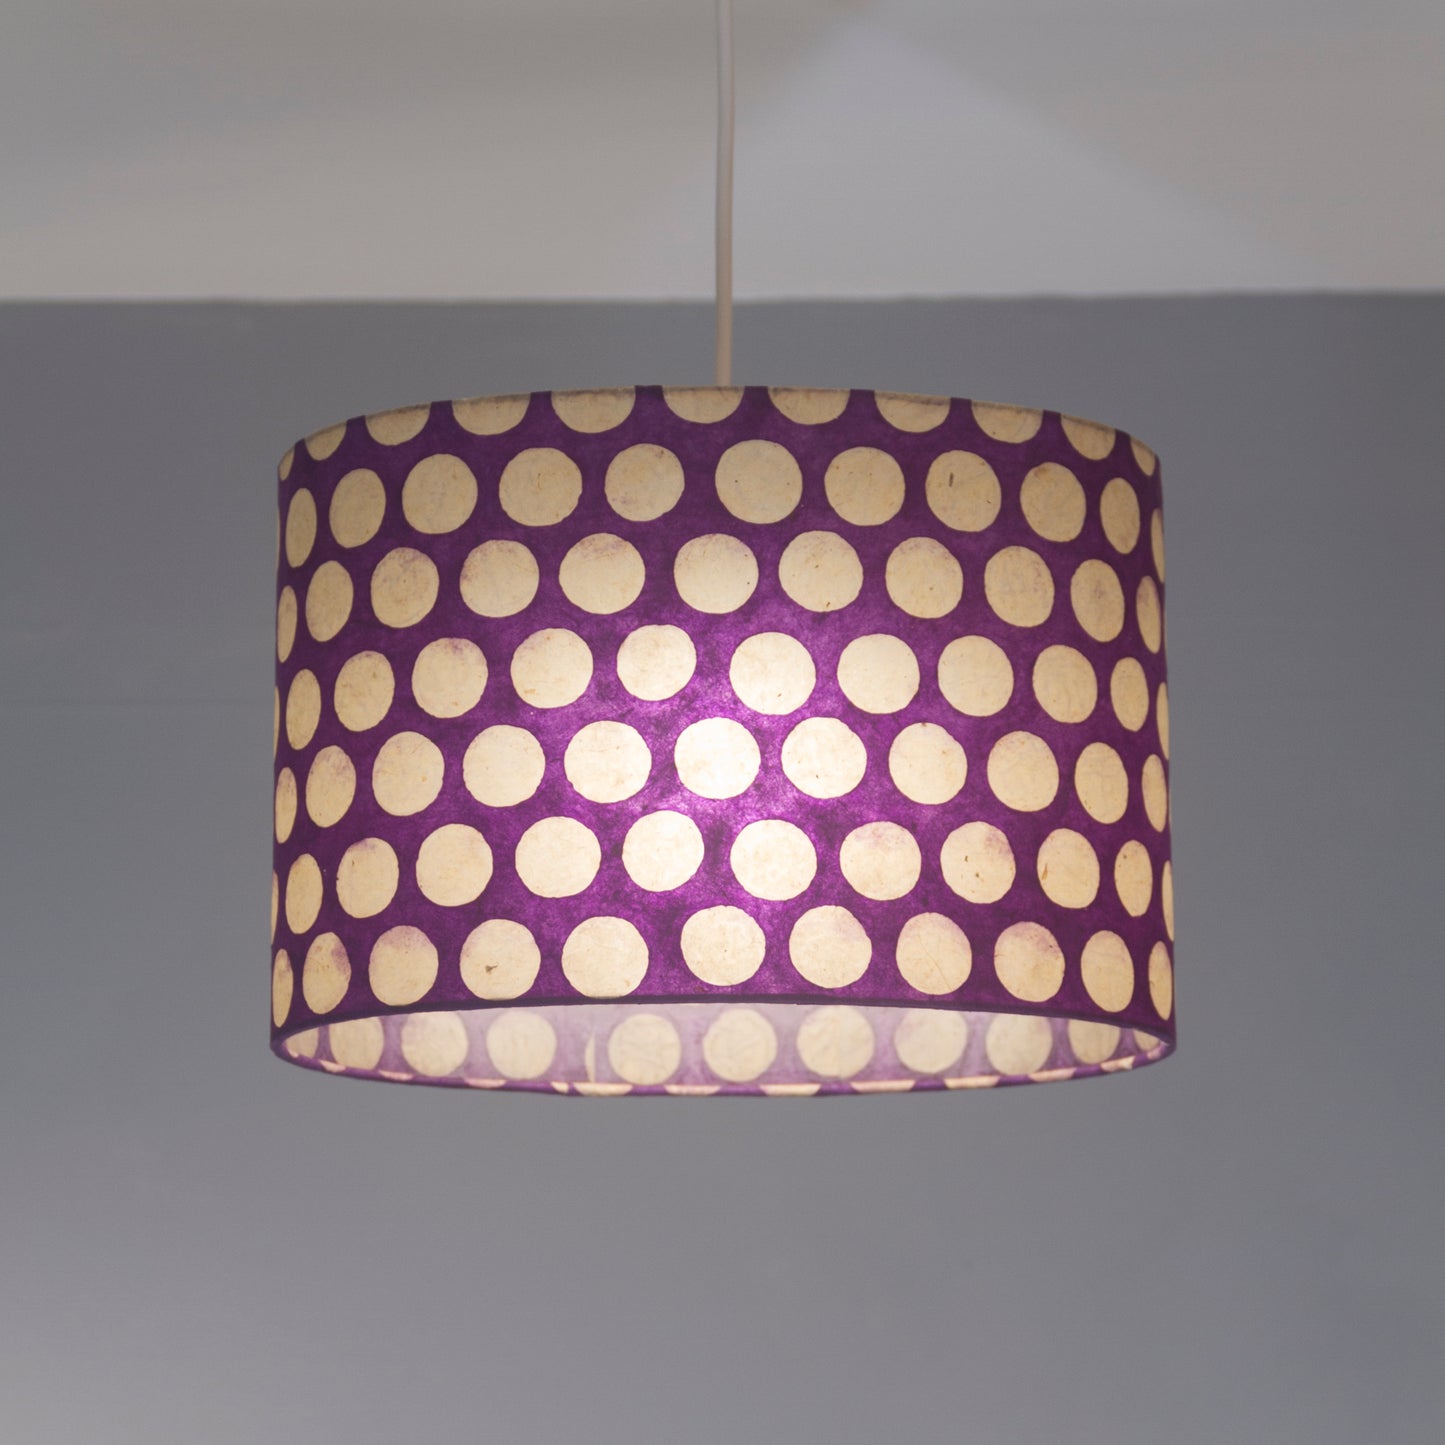 Conical Lamp Shade P79 - Batik Dots on Purple, 23cm(top) x 40cm(bottom) x 31cm(height)